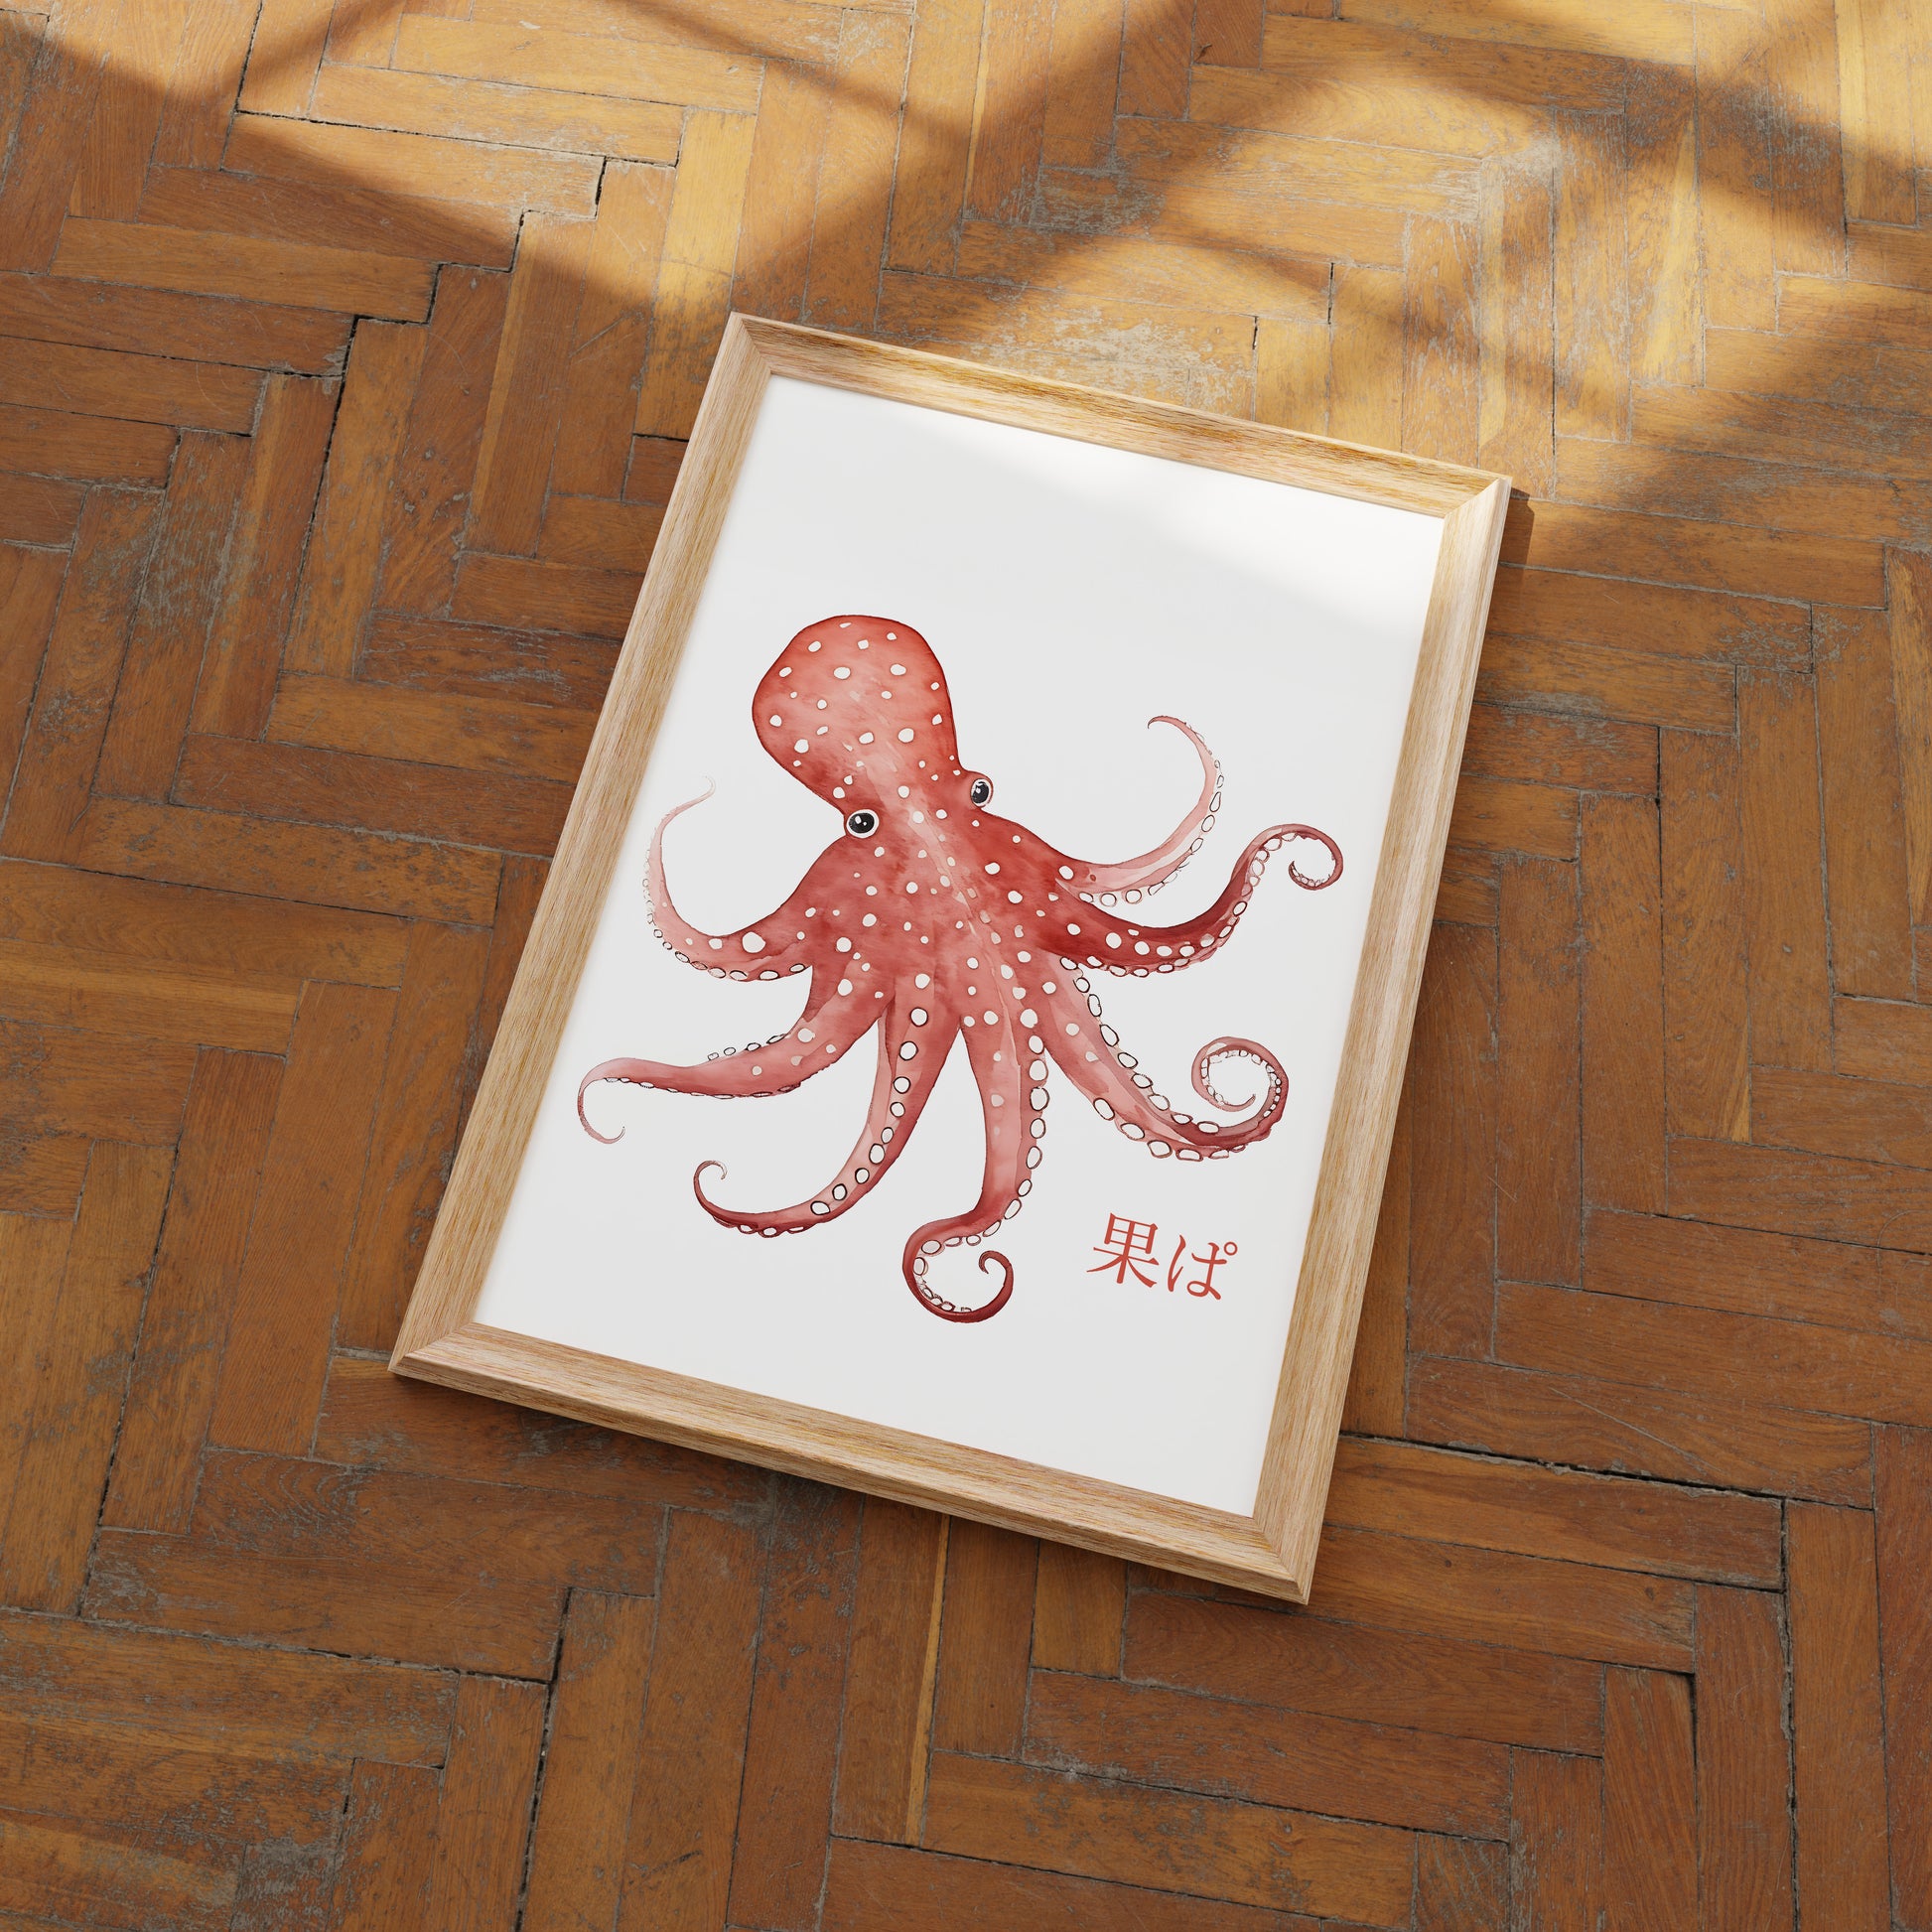 "Framed octopus illustration lying on a herringbone wood floor."